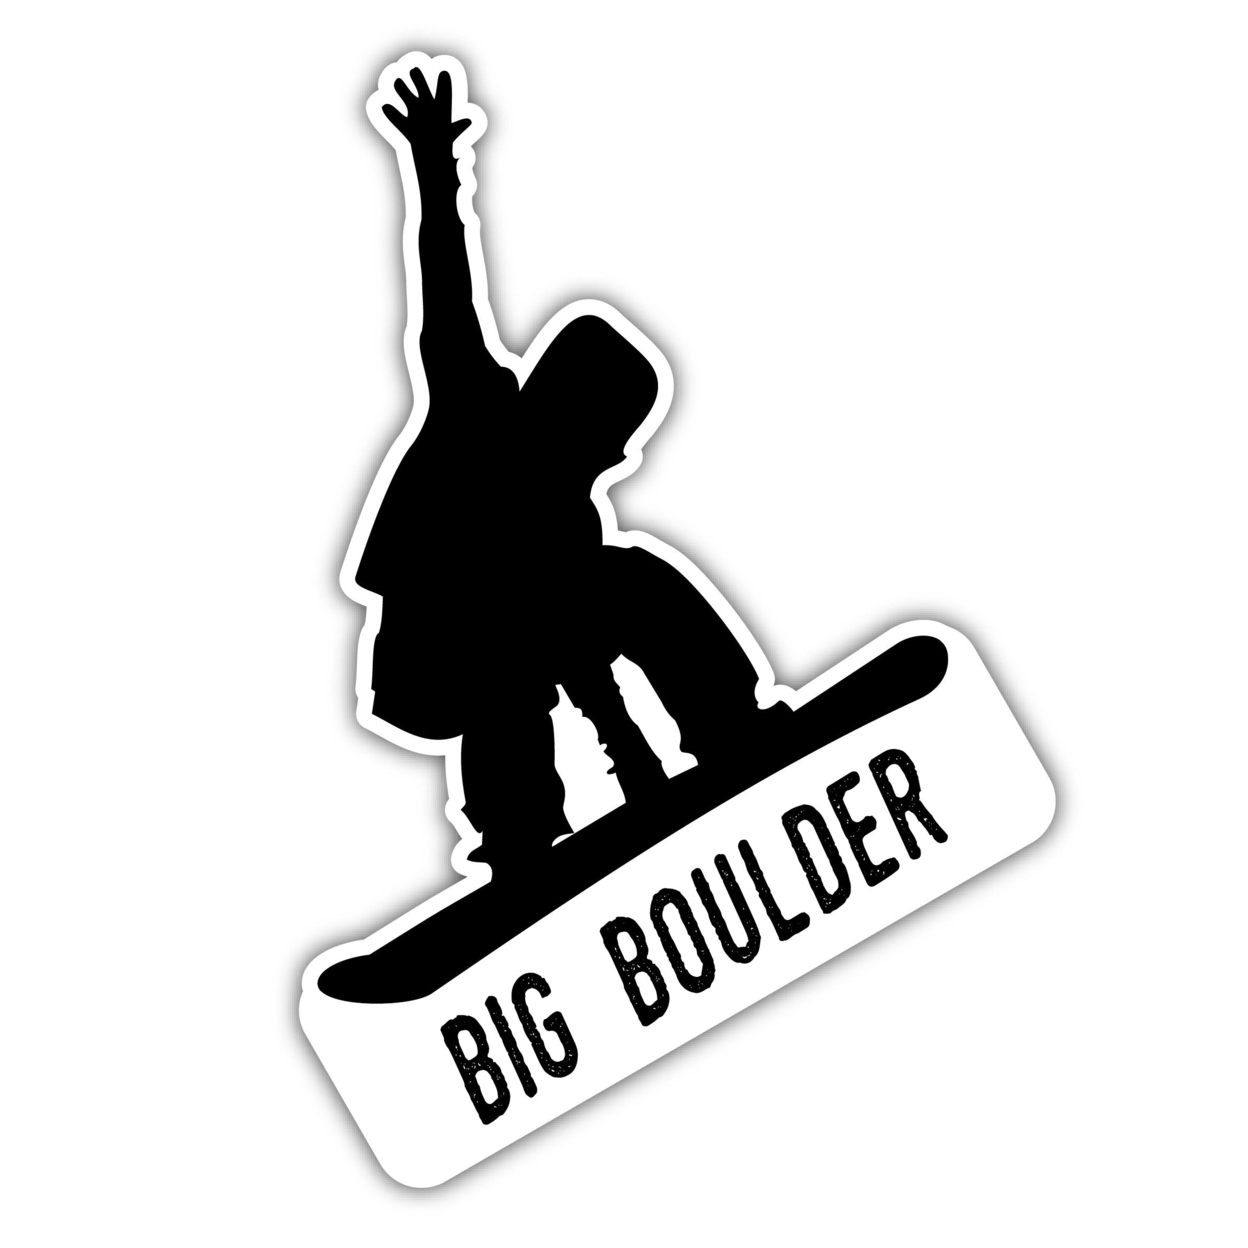 Big Boulder Pennsylvania Ski Adventures Souvenir Approximately 5 X 2.5-Inch Vinyl Decal Sticker Goggle Design